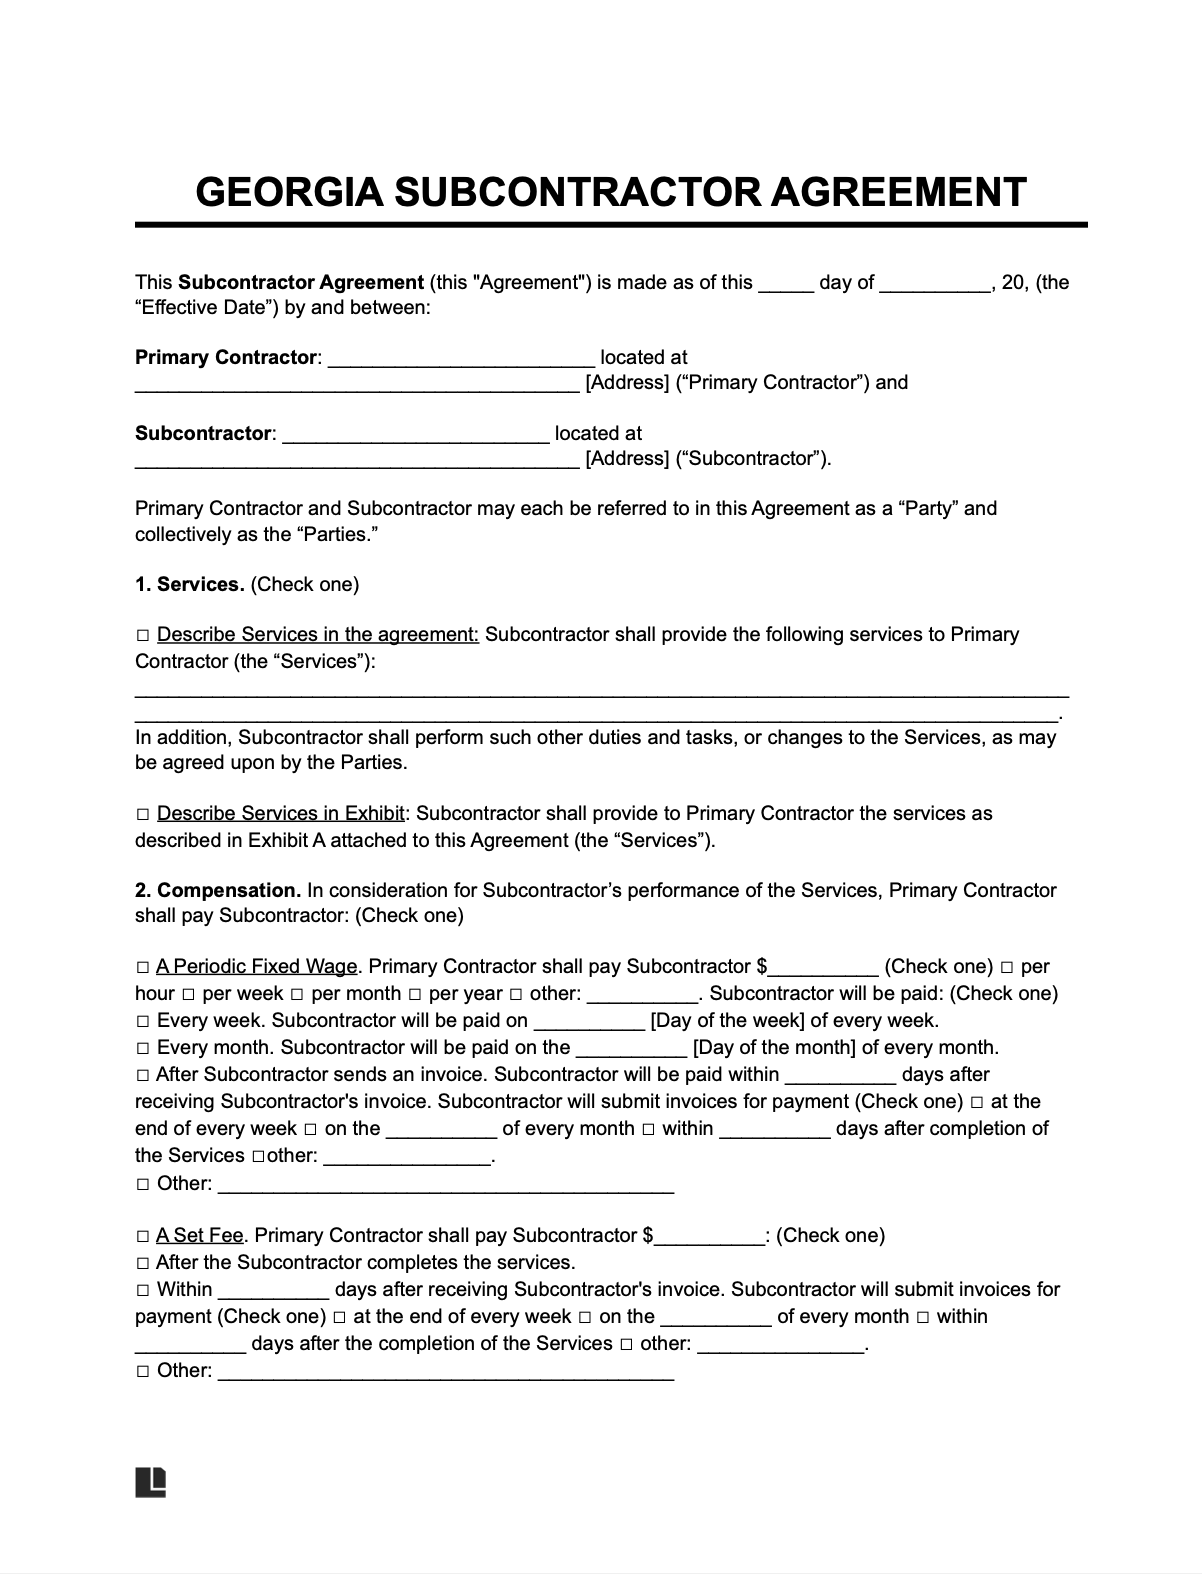 georgia subcontractor agreement template